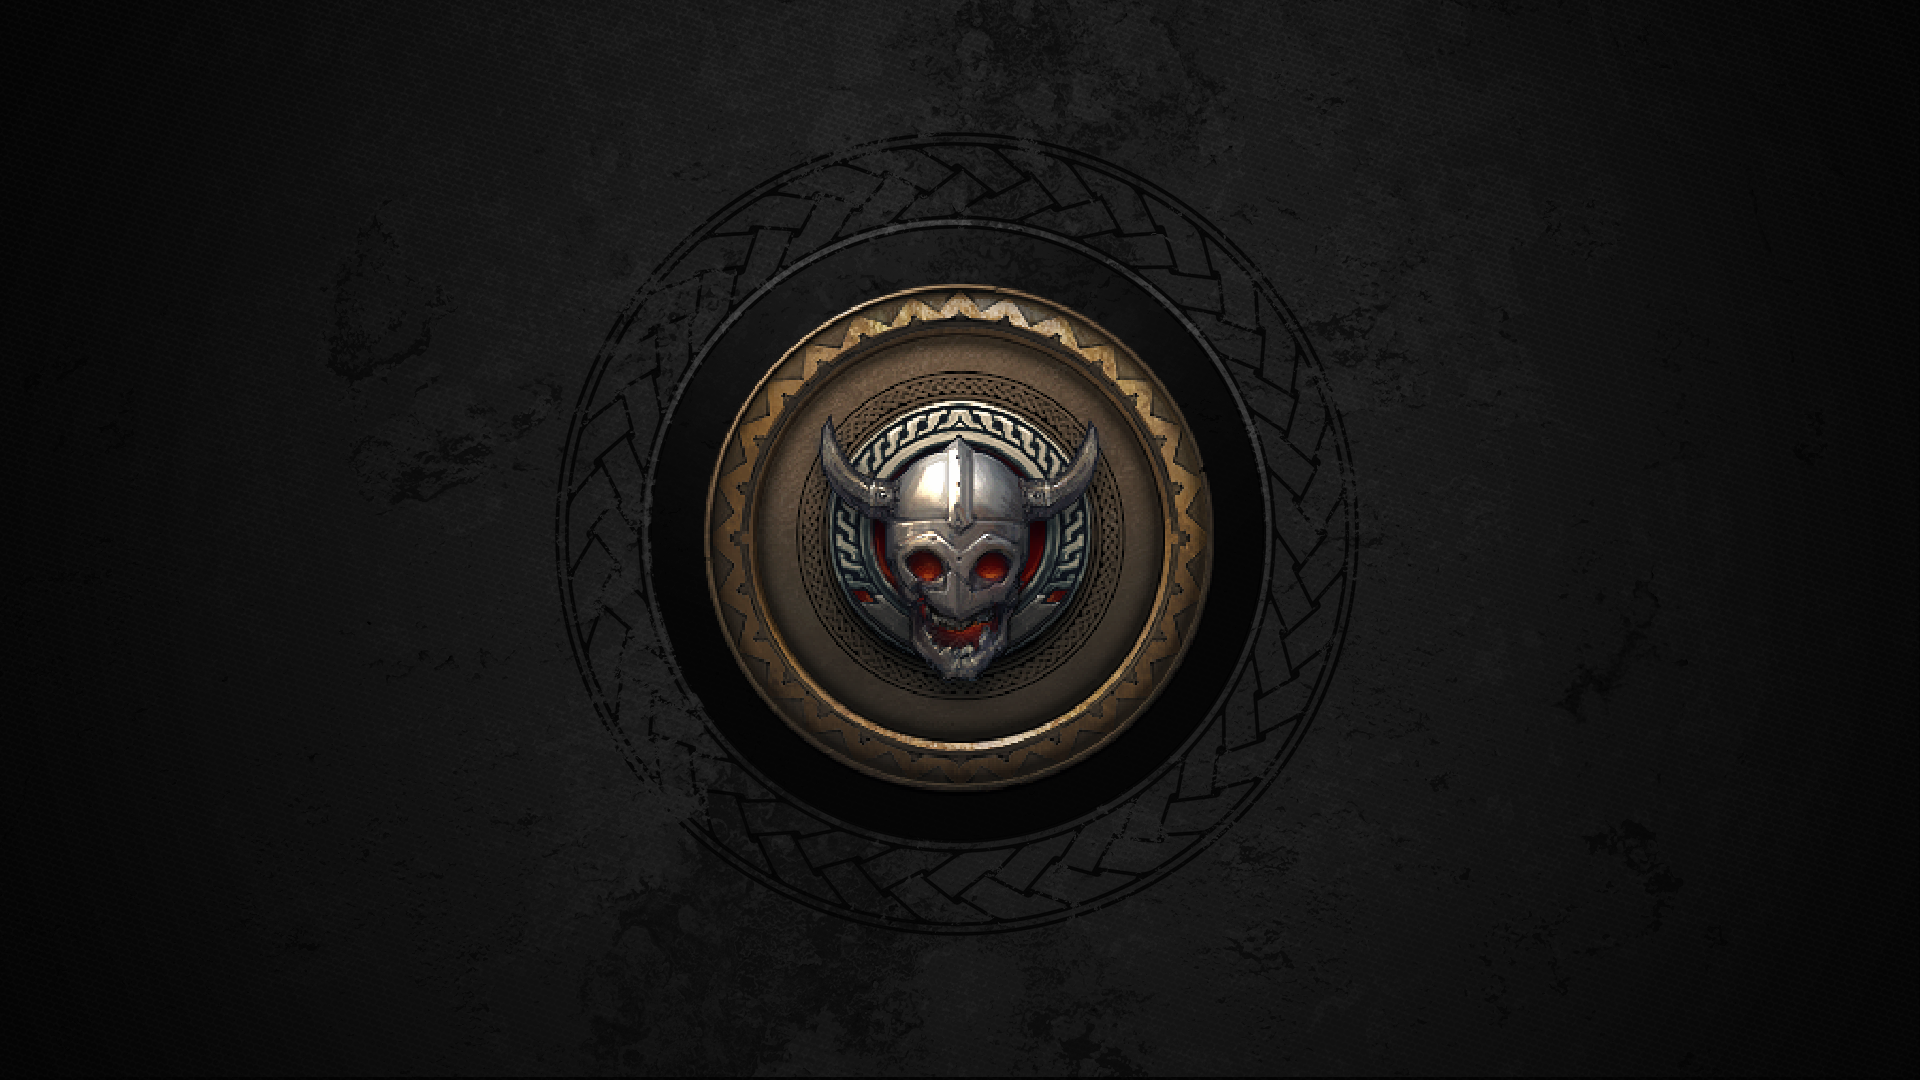 Icon for Valhalla Champion